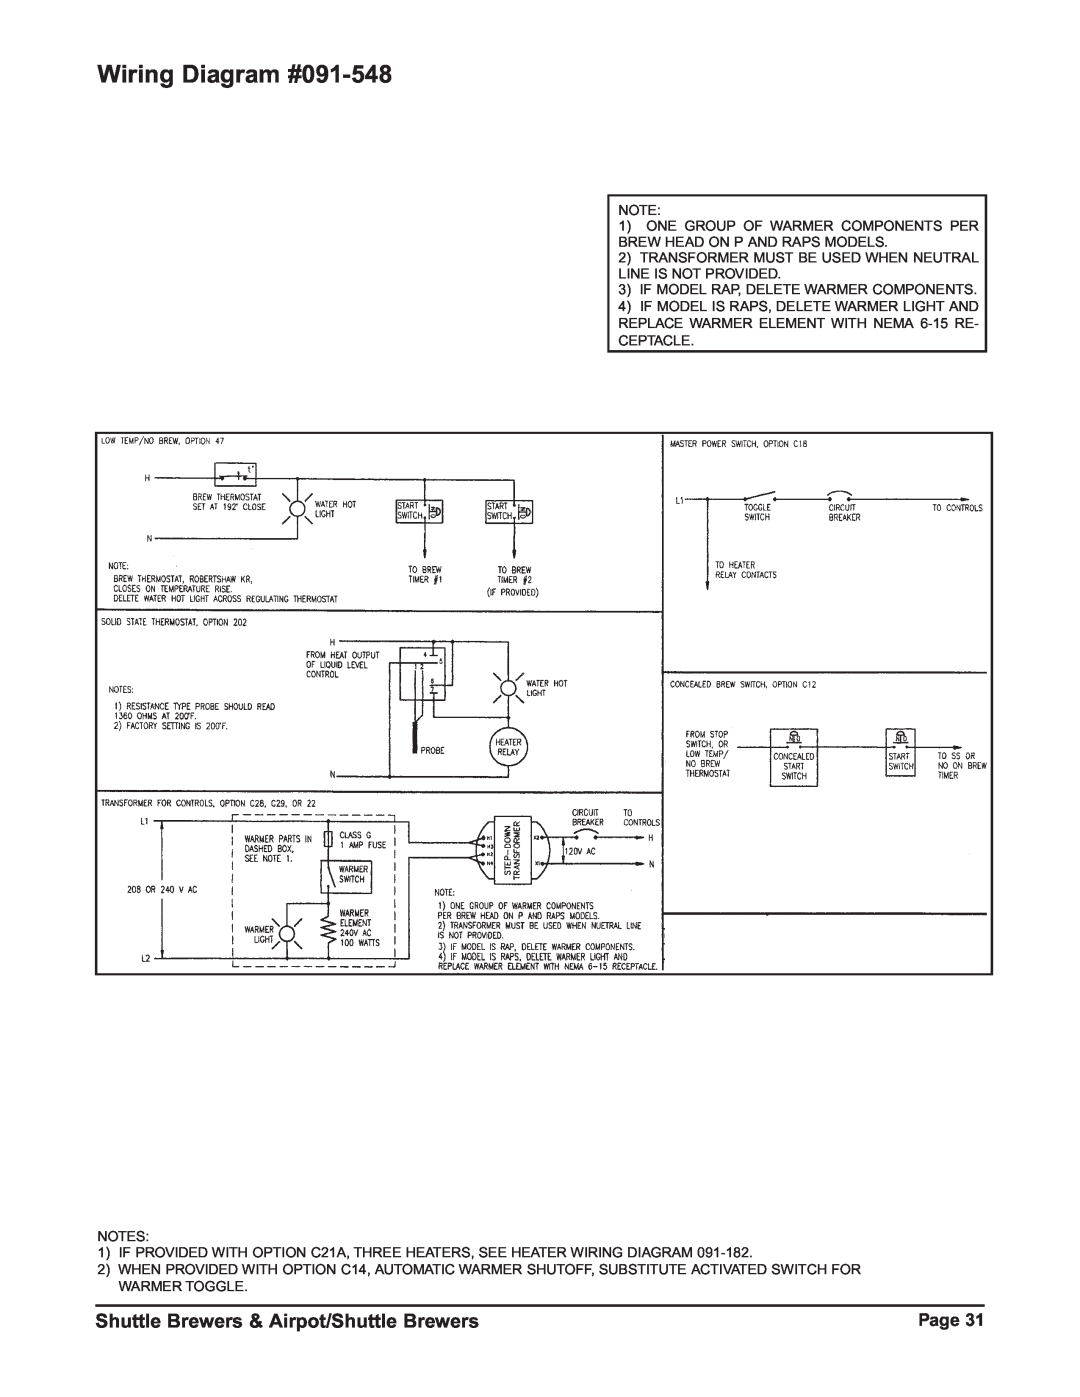 Grindmaster RAP400E, RAPS300E, RAP300E, RAPS400E Wiring Diagram #091-548, Shuttle Brewers & Airpot/Shuttle Brewers, Page 